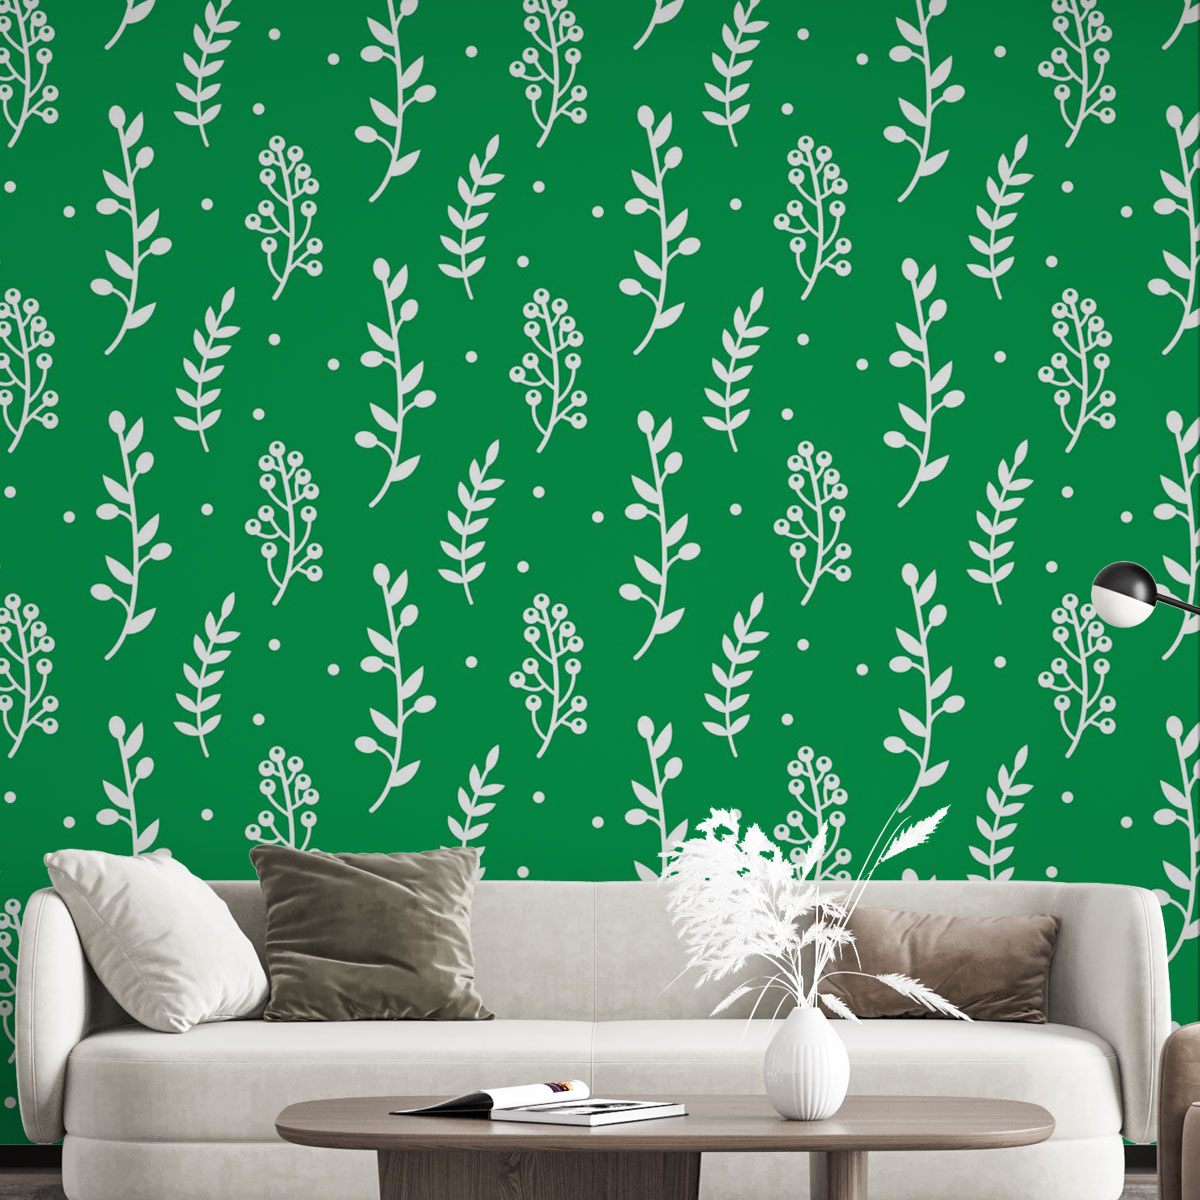 Christmas Mistletoe And Leaf, Mistletoe Clipart On Green Wall Mural